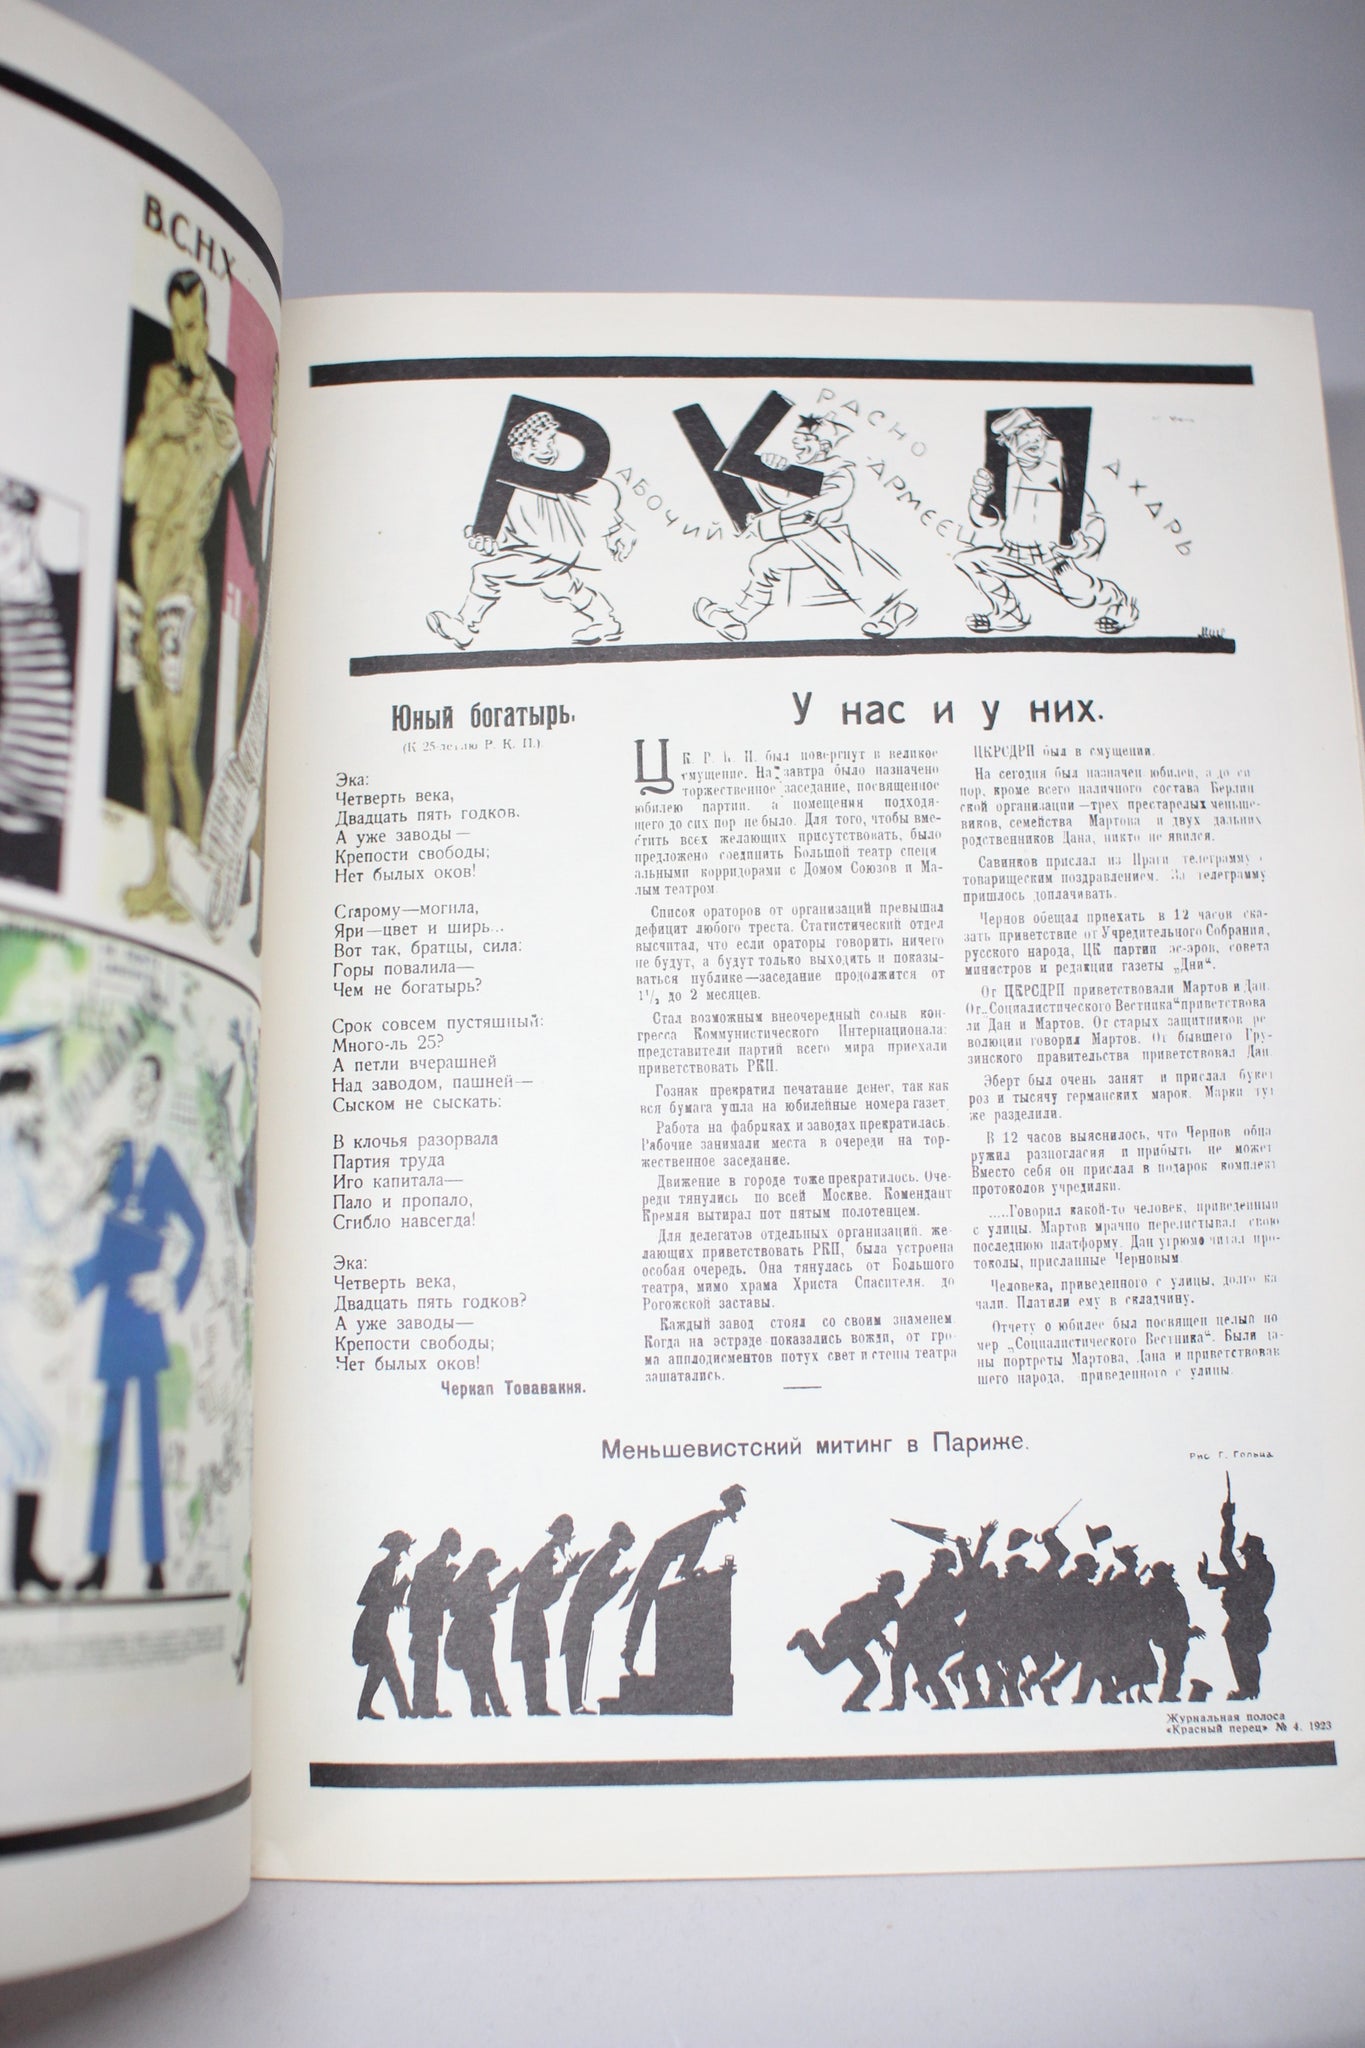 Krasny Perets / Soviet satire graphic